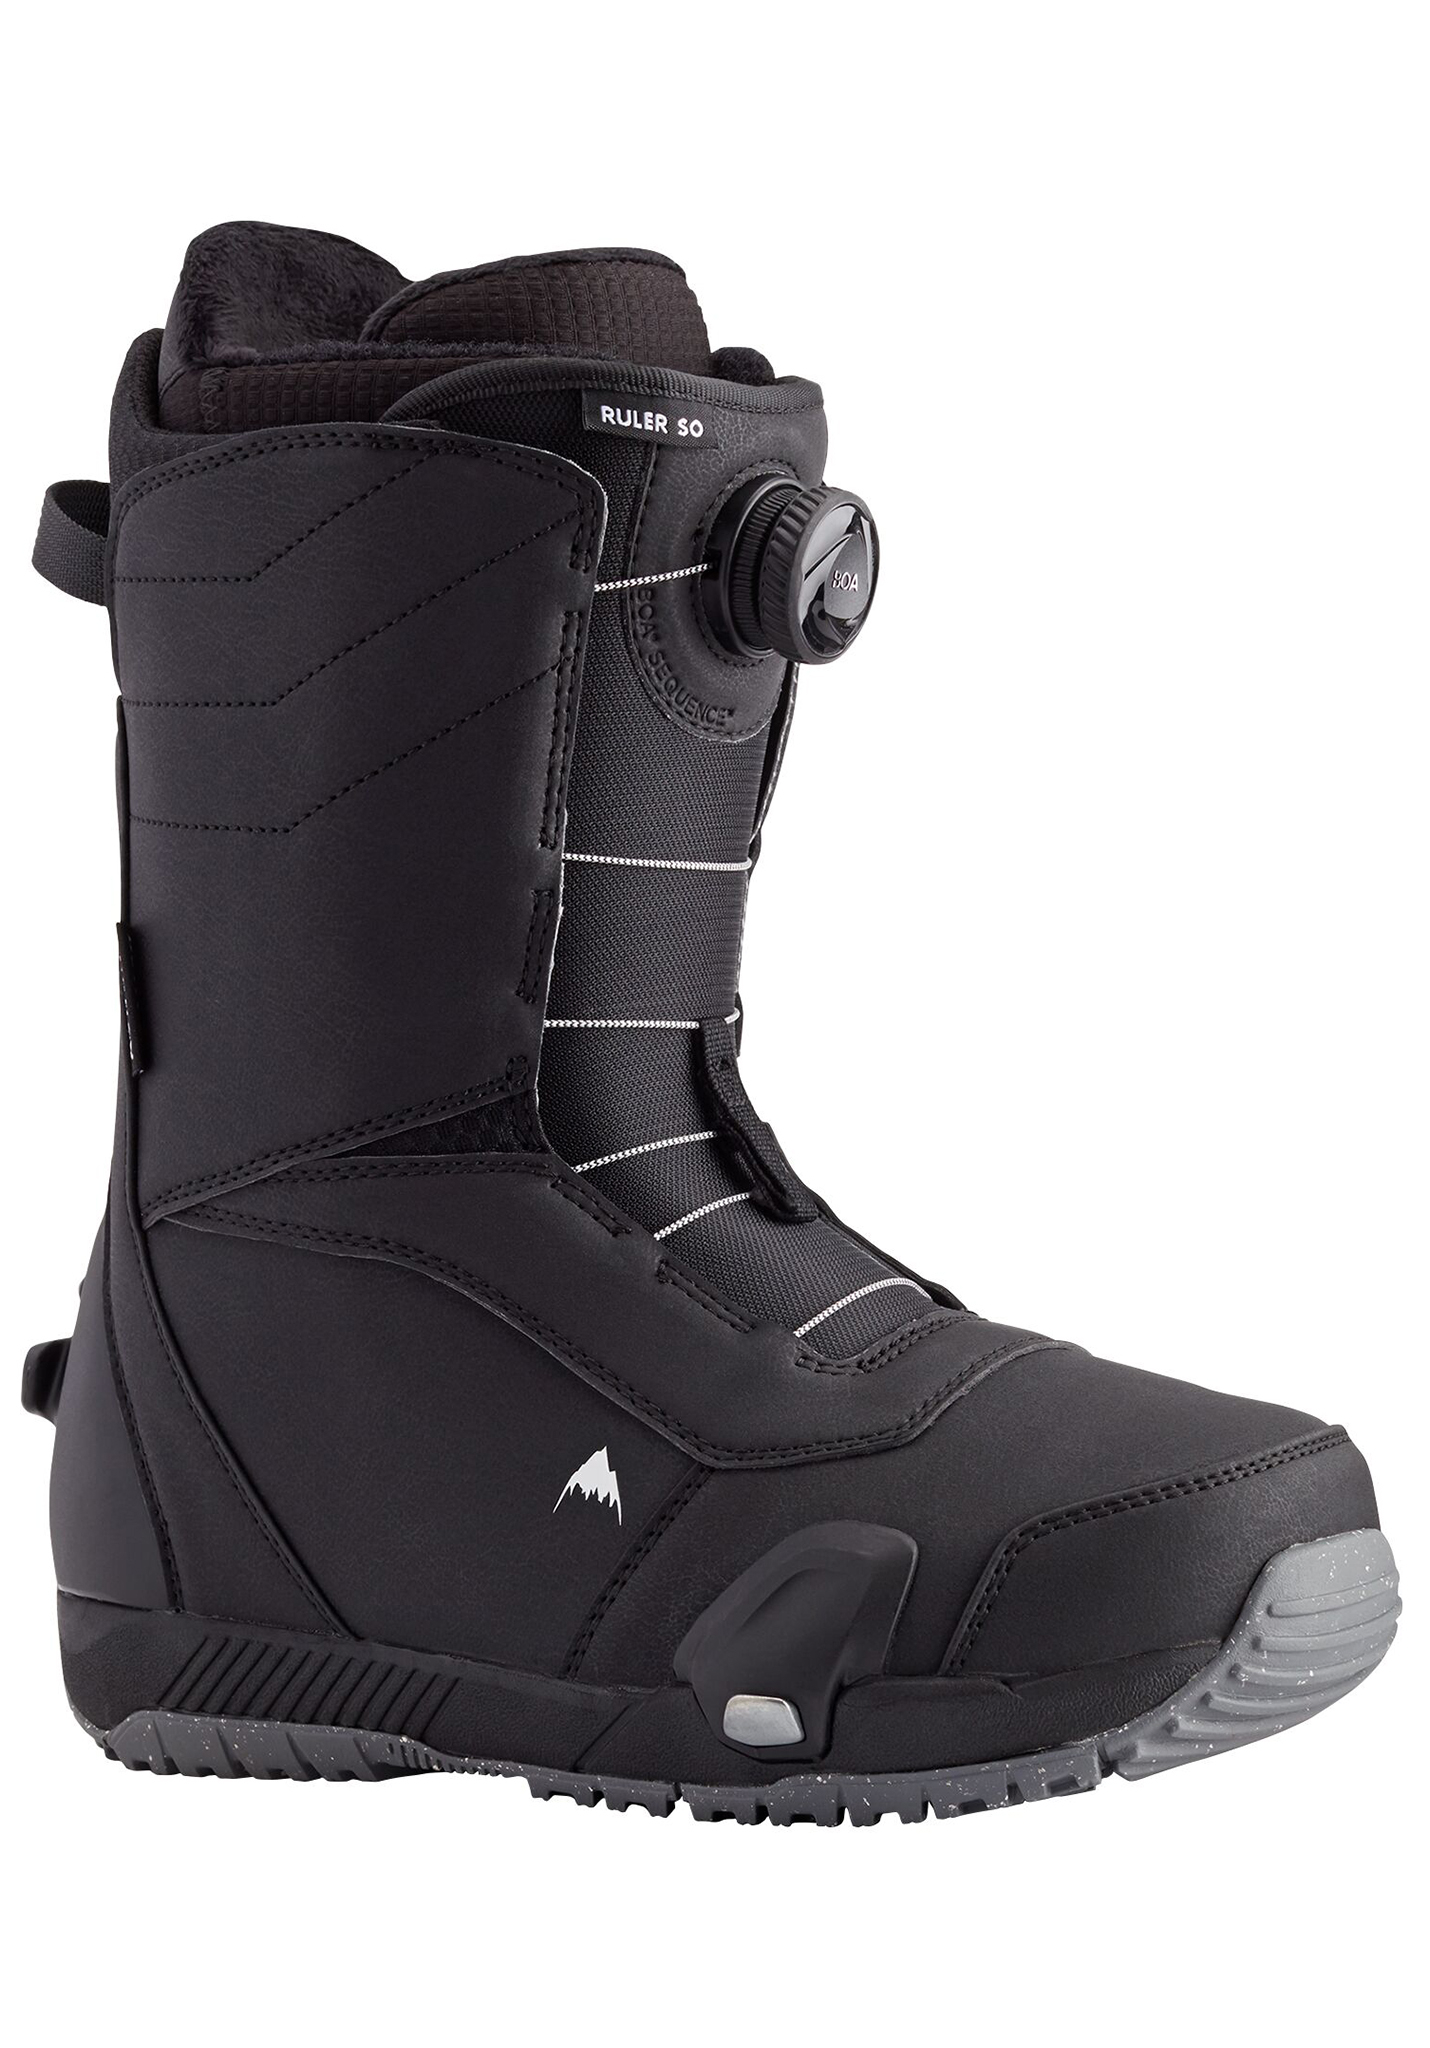 Burton Ruler Step On Freeride Snowboard Boots black 44,5